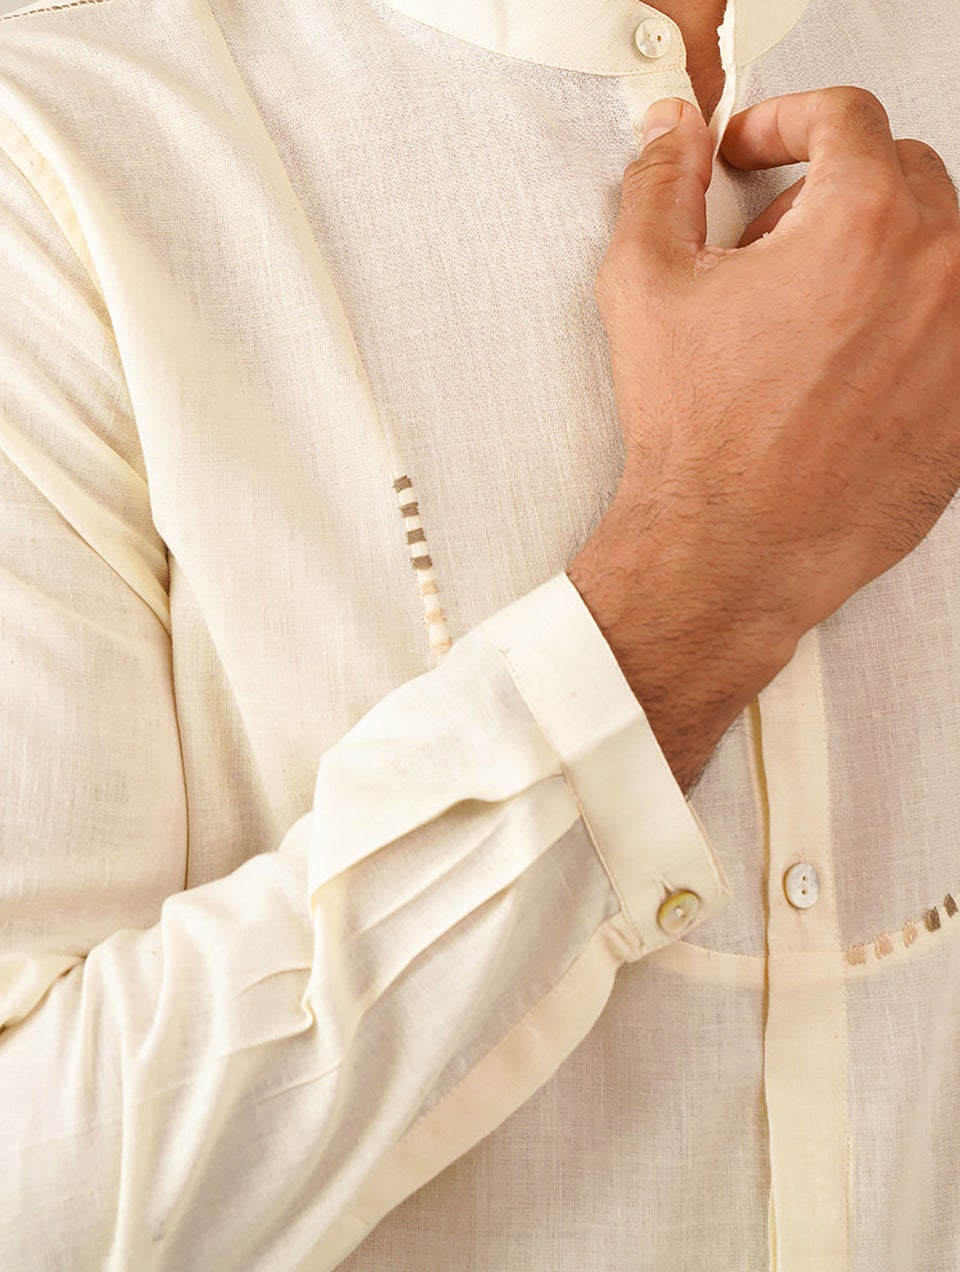 Men Ivory Handspun And Handwoven Cotton Full Sleeves Short Shirt